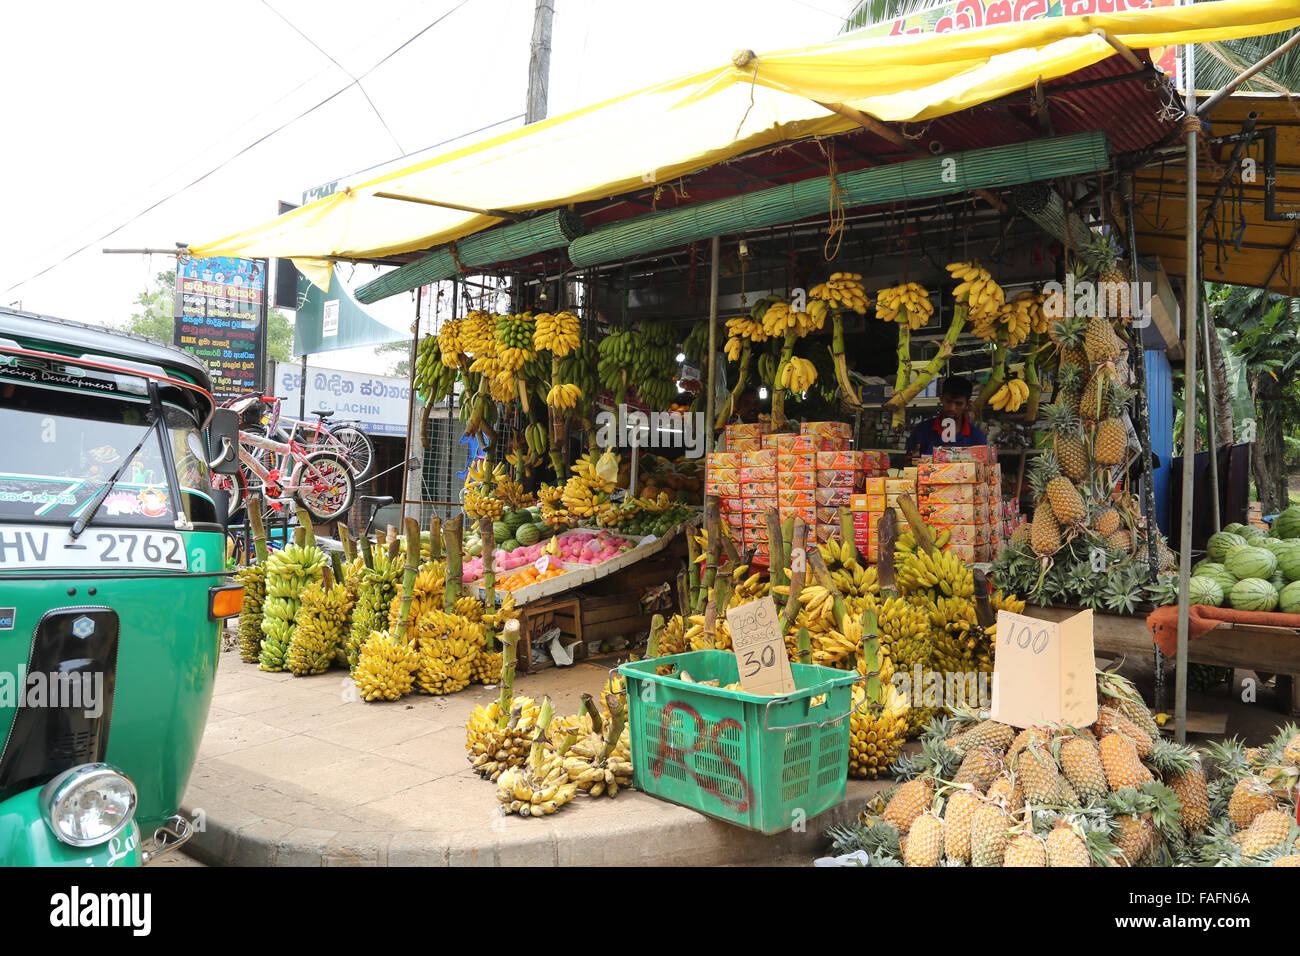 Fruit market stall by roadside in Sri Lanka selling bananas with tuk tuk Stock Photo